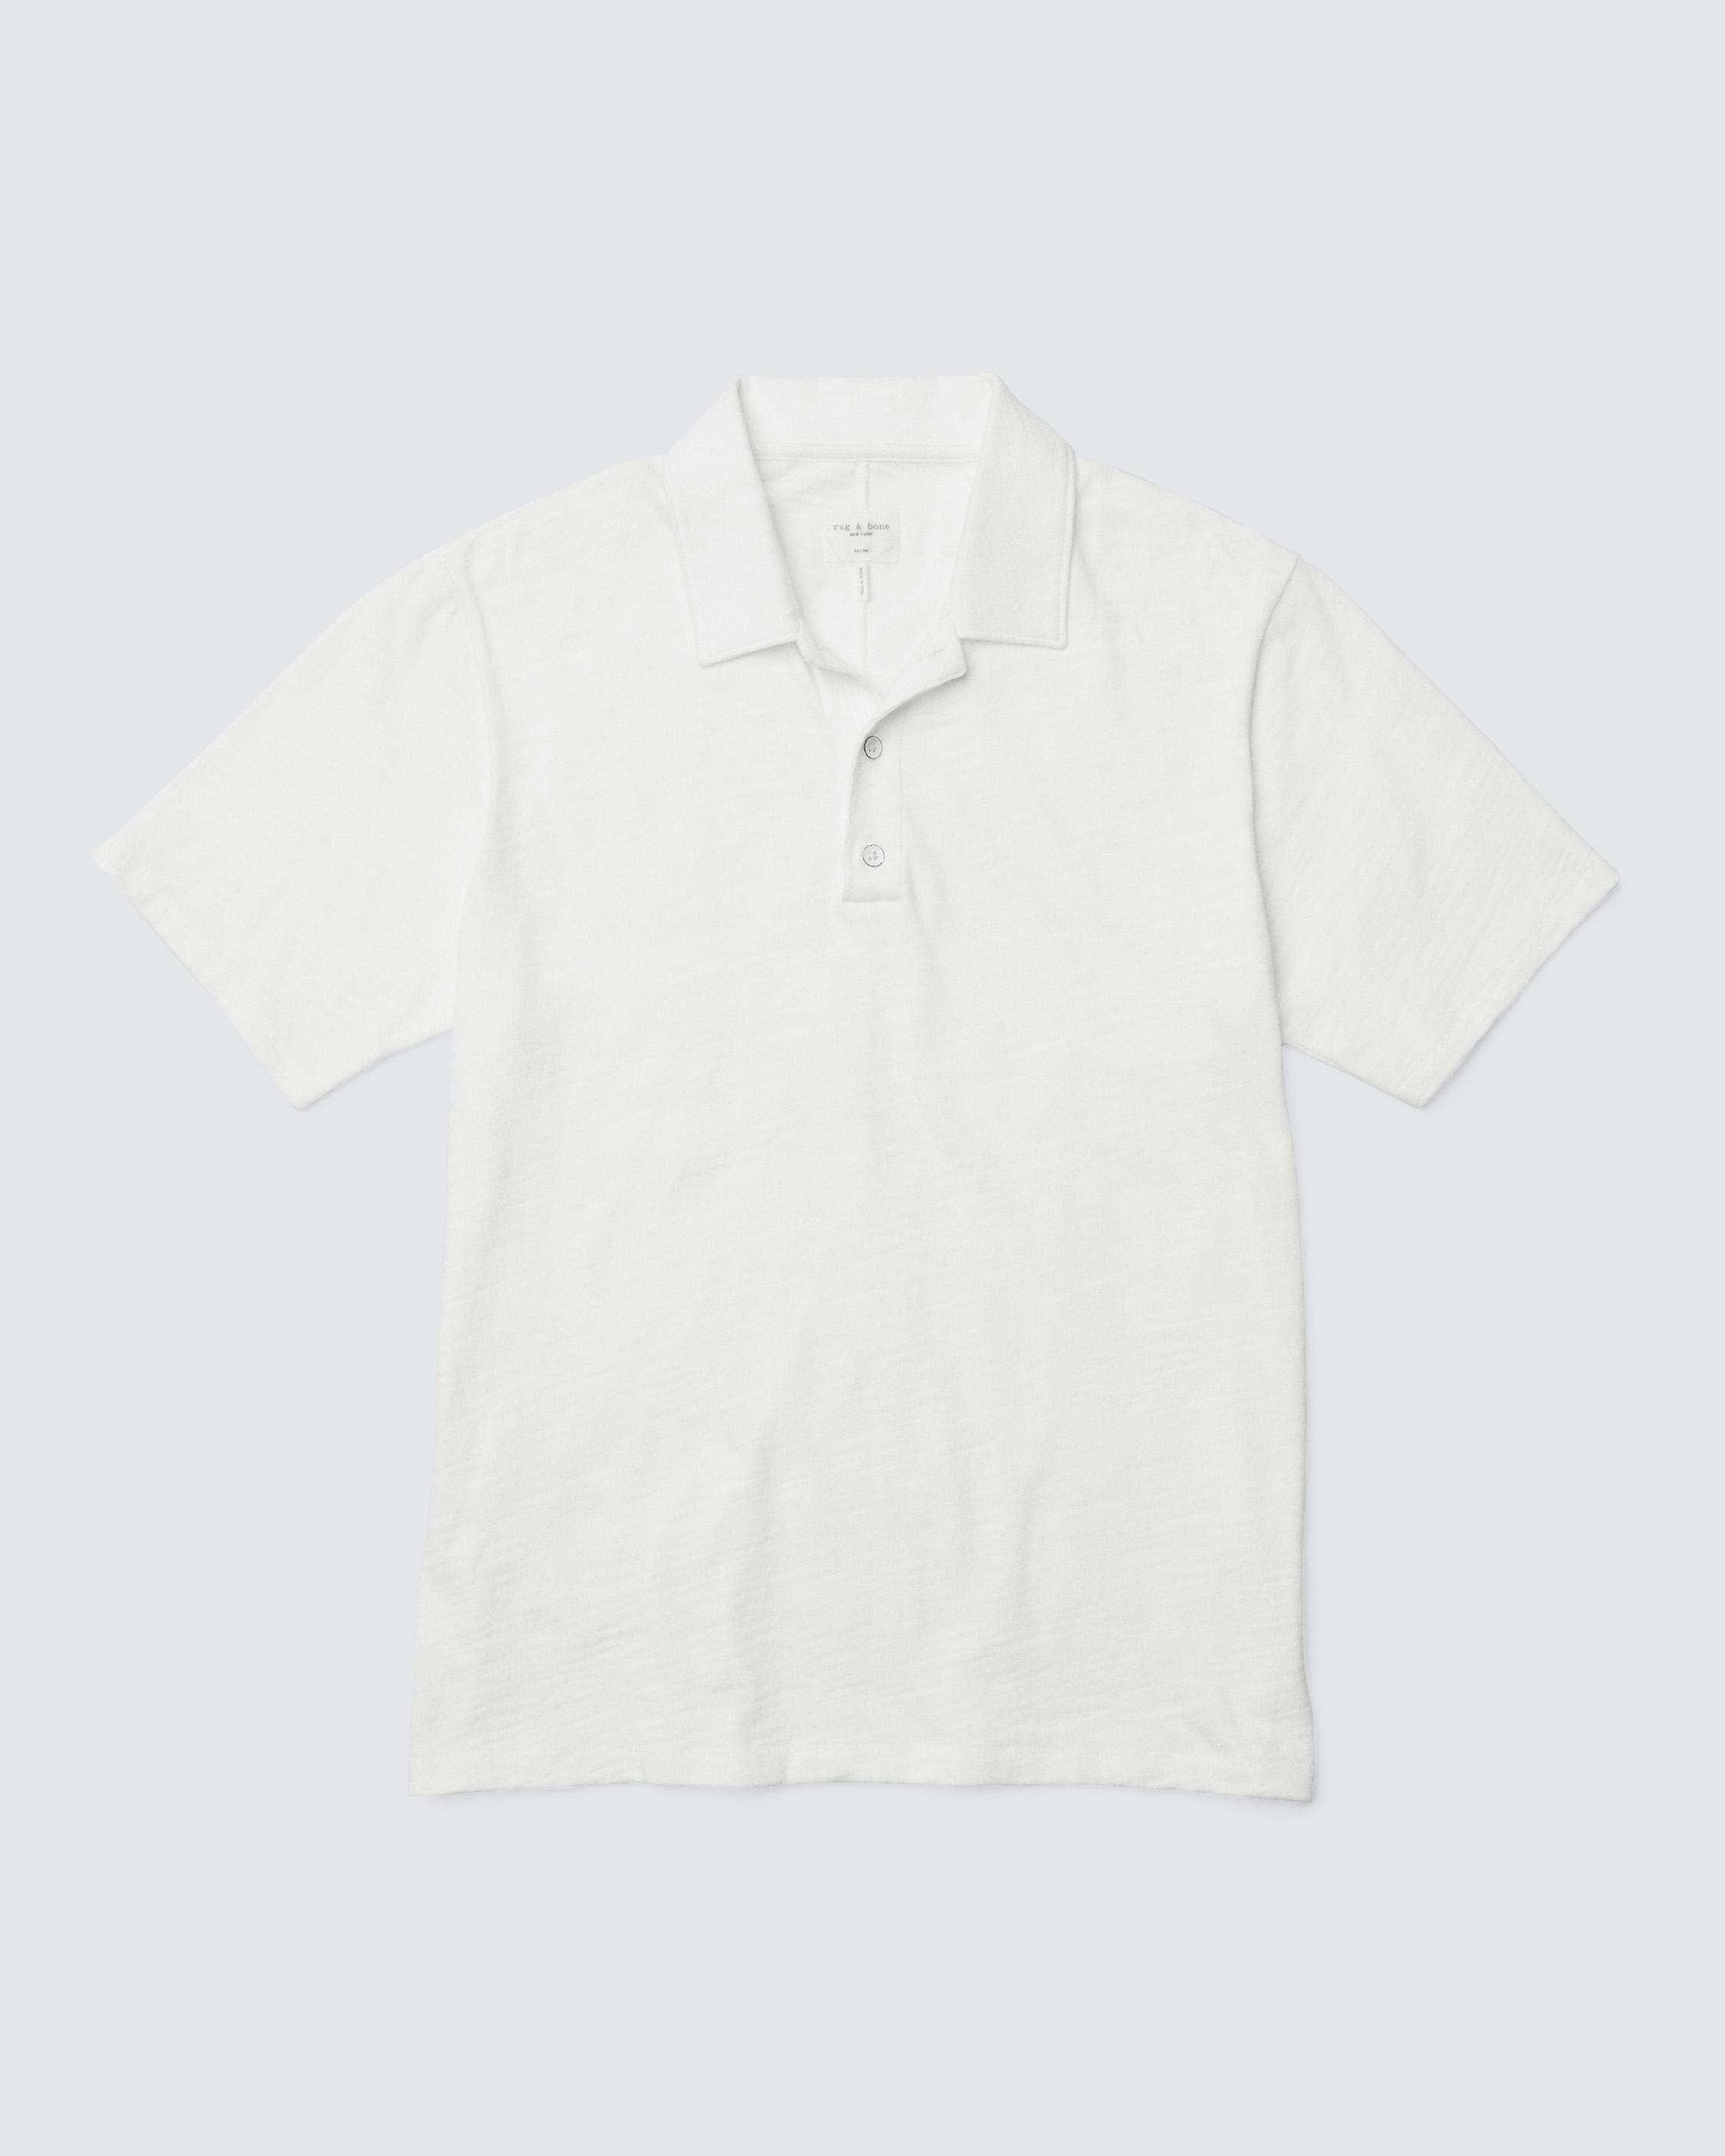 Classic Flame Polo
Pima Cotton Shirt - 1